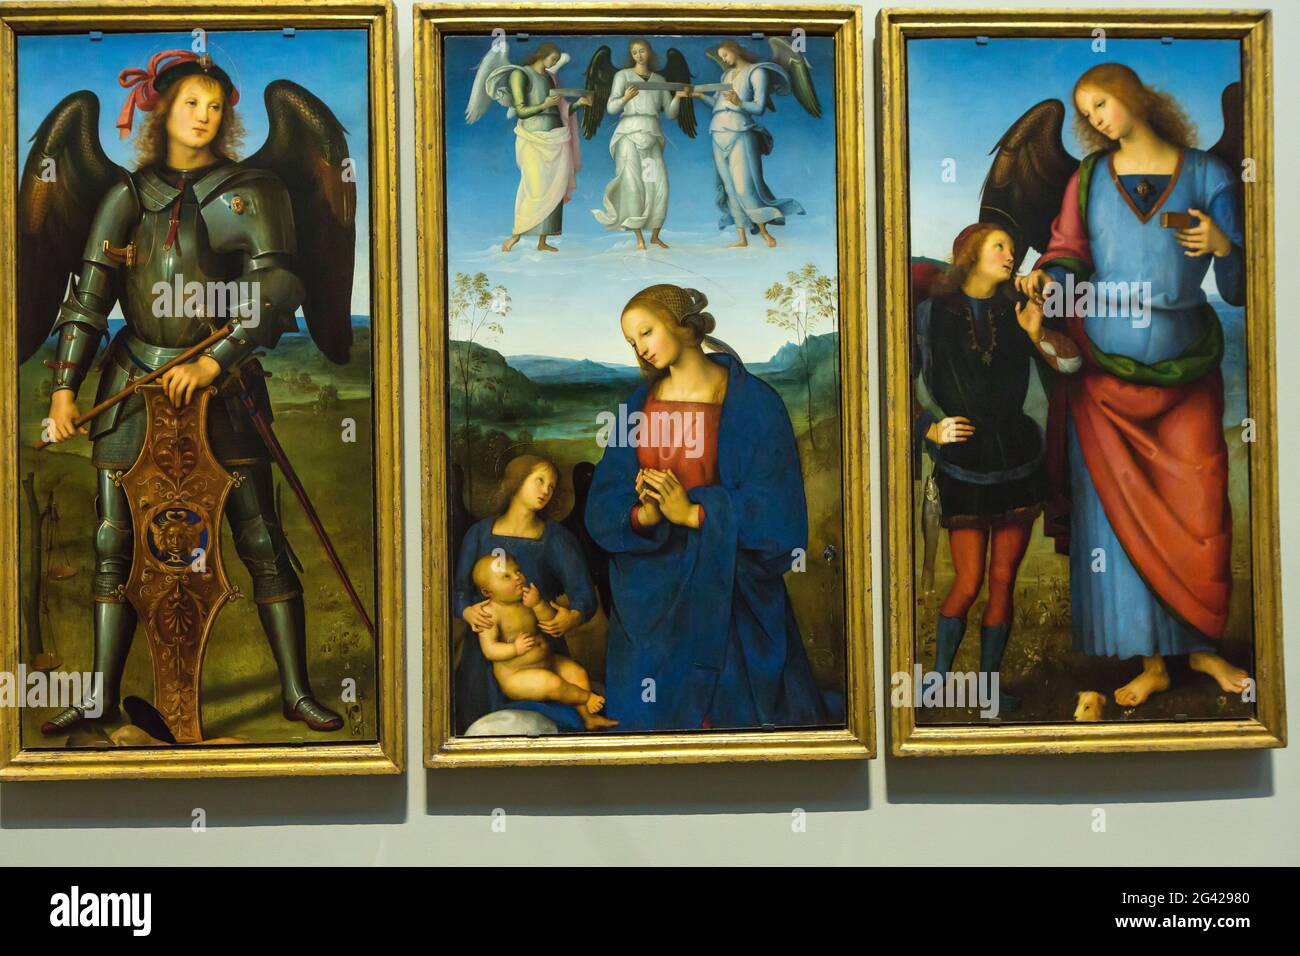 Victoria and Albert Museum - London - Il Perugino 2023